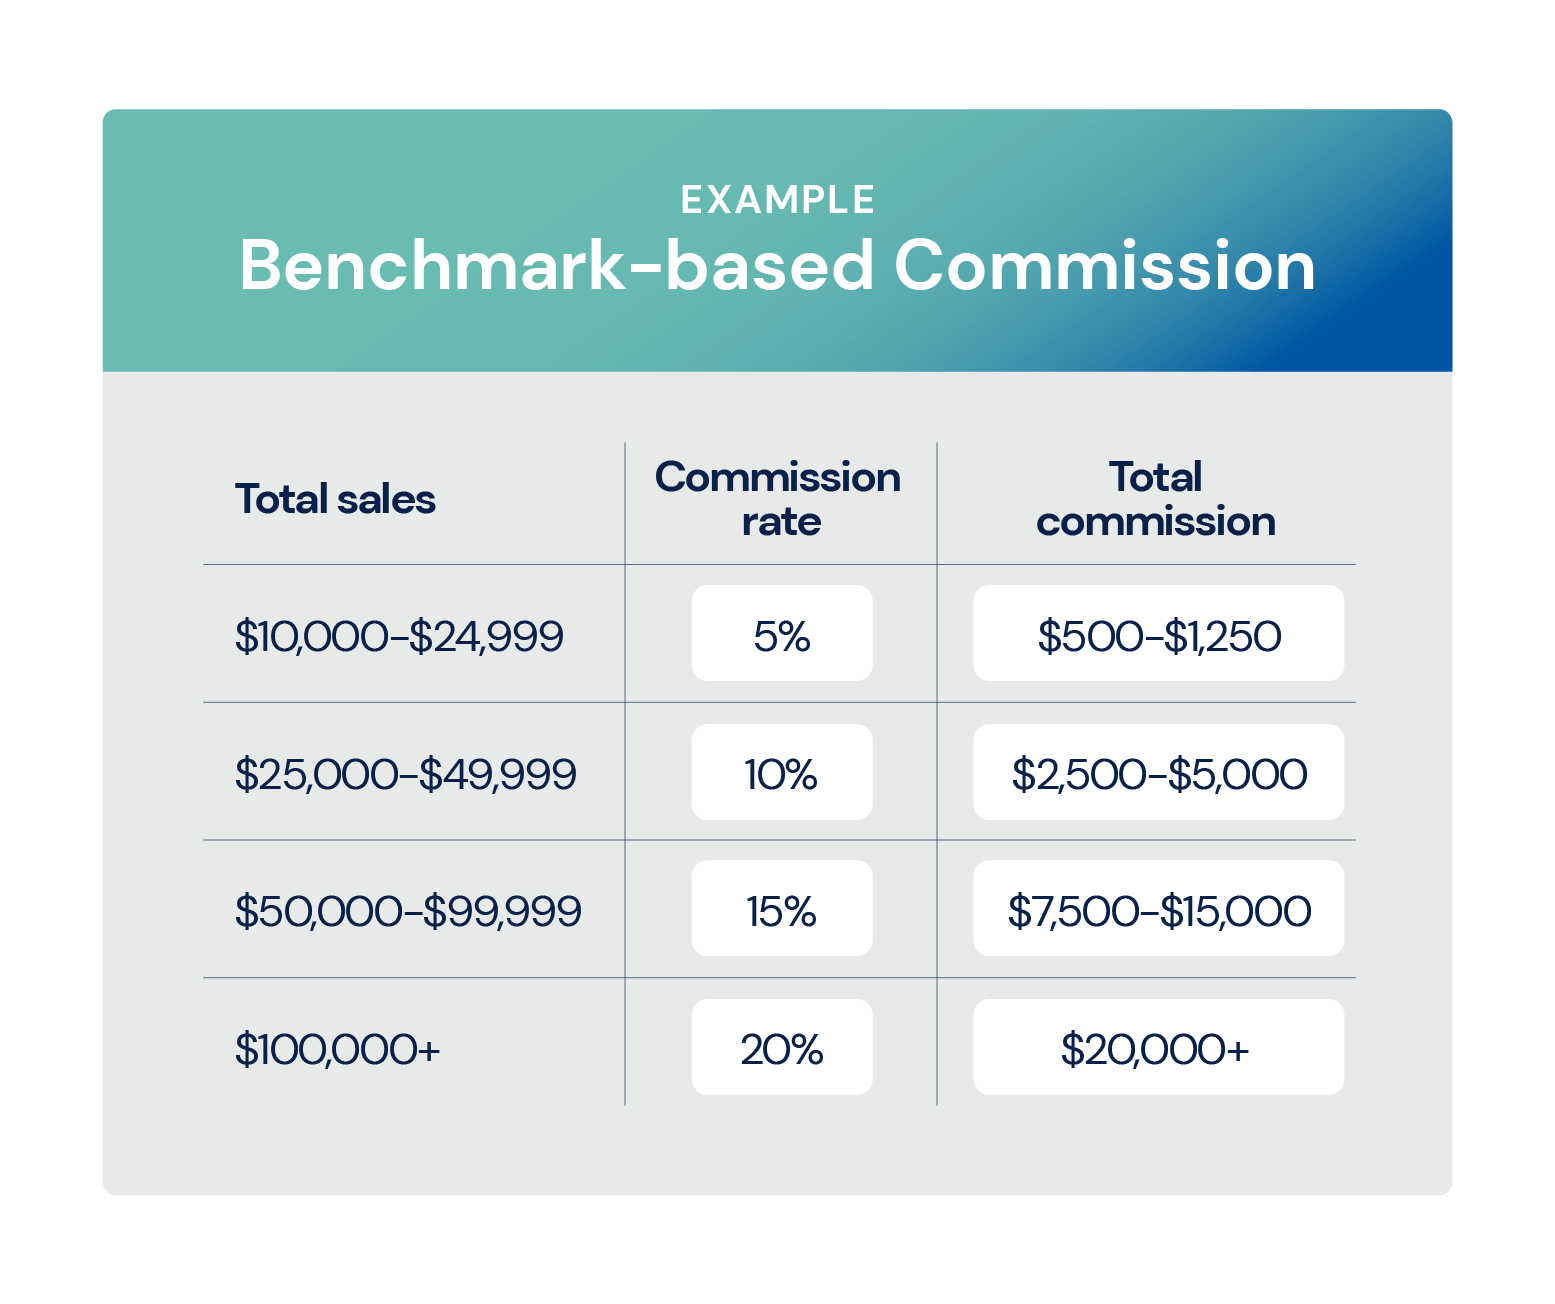 Benchmark-based Commission